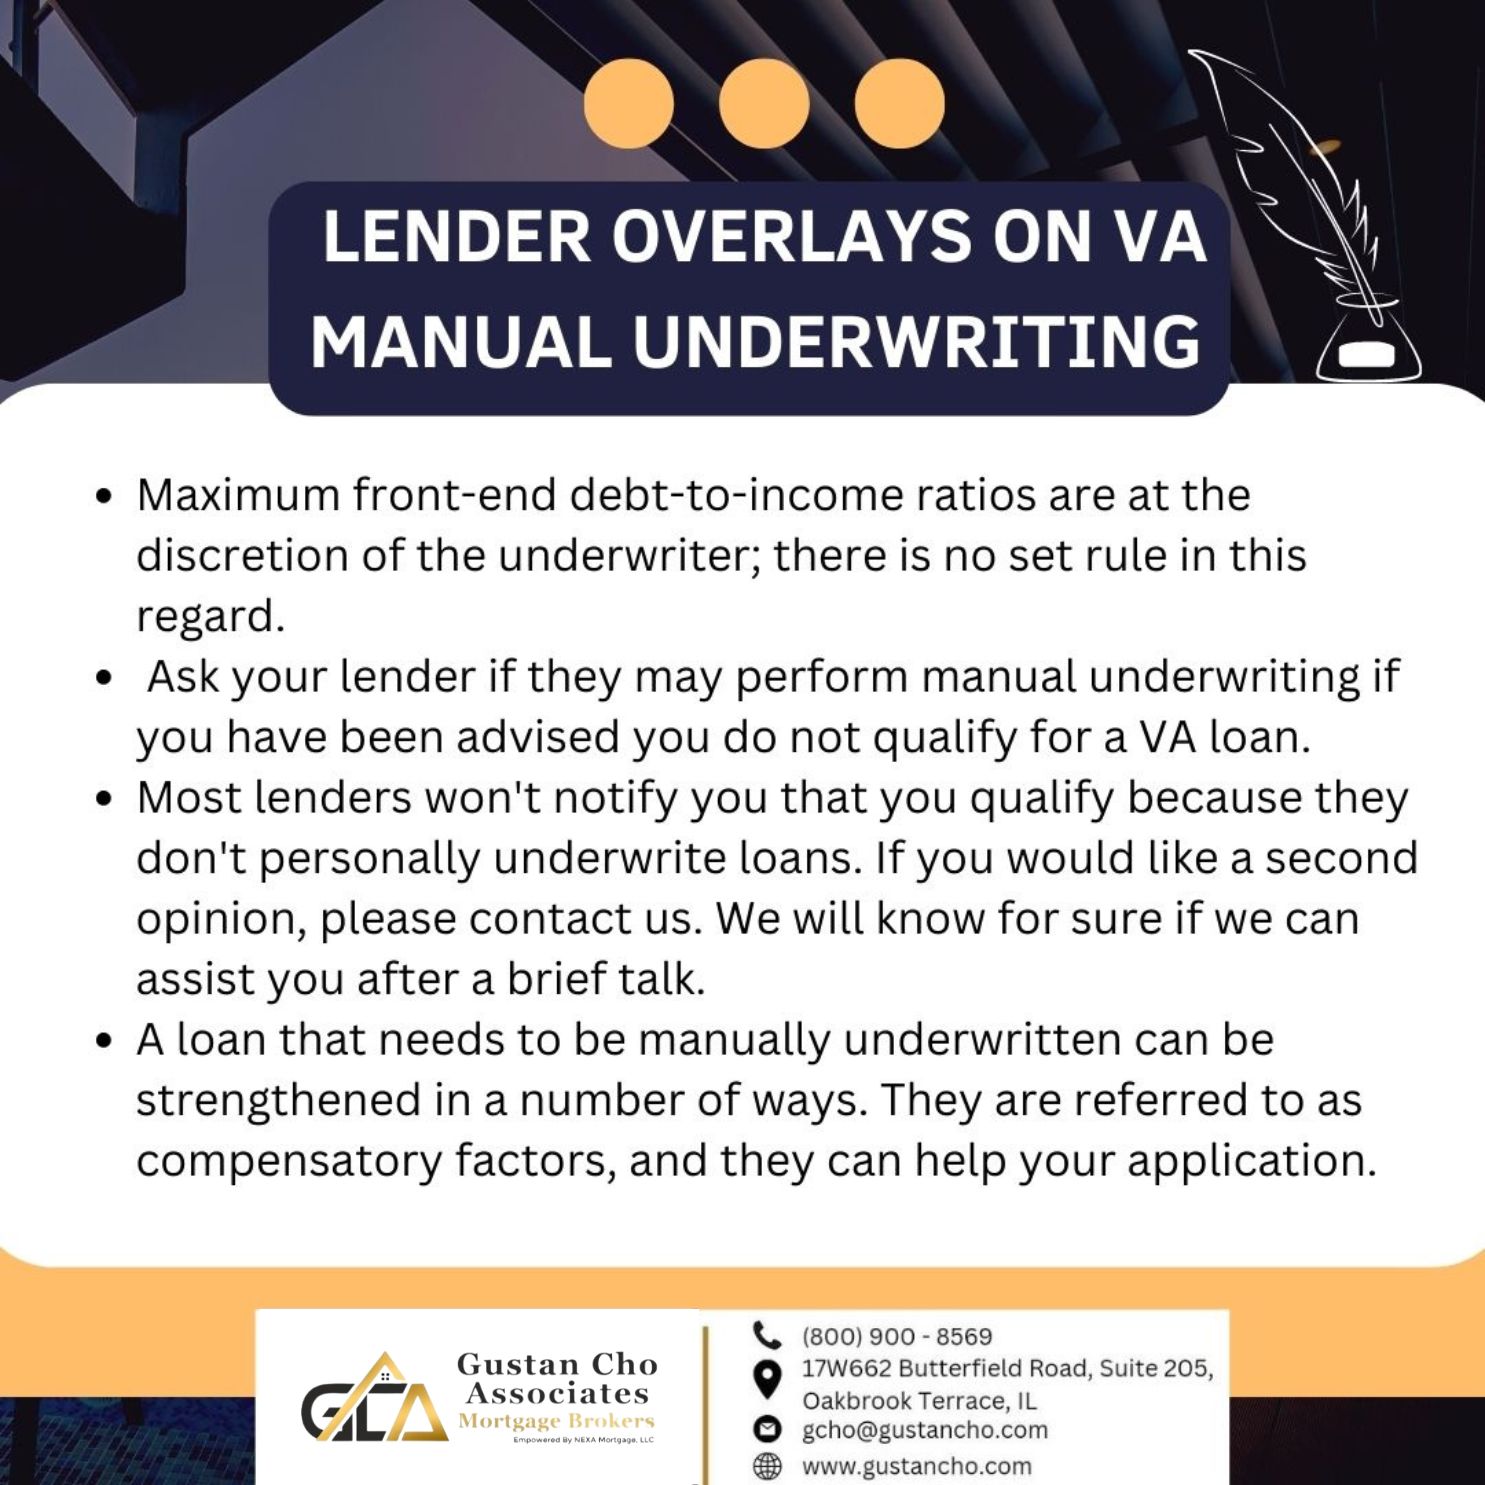 Lender Overlays on VA Manual Underwriting 